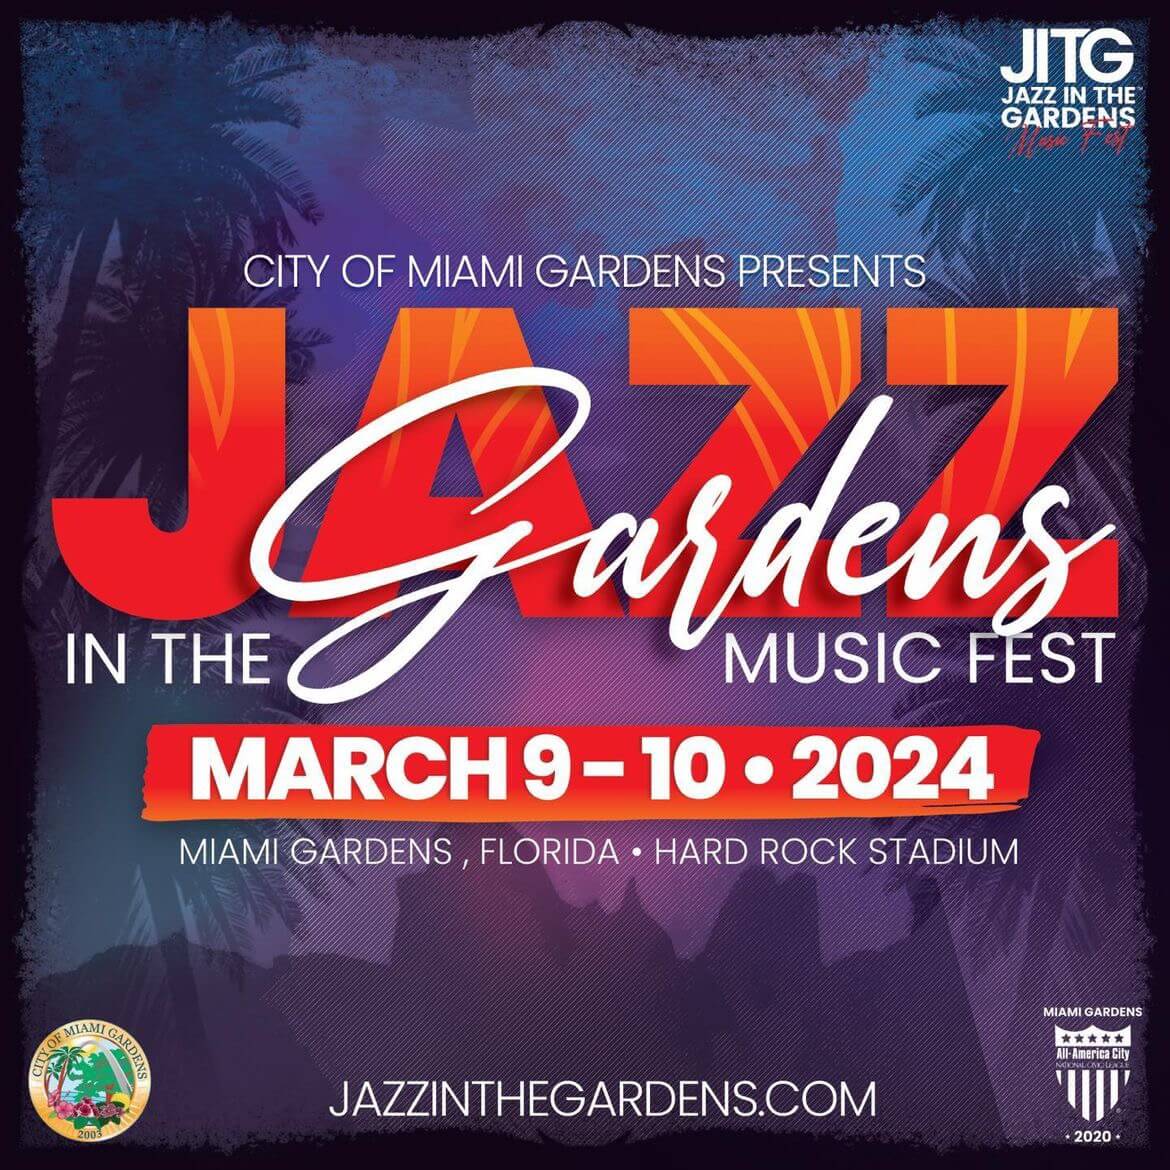 Jazz in the gardens Miami